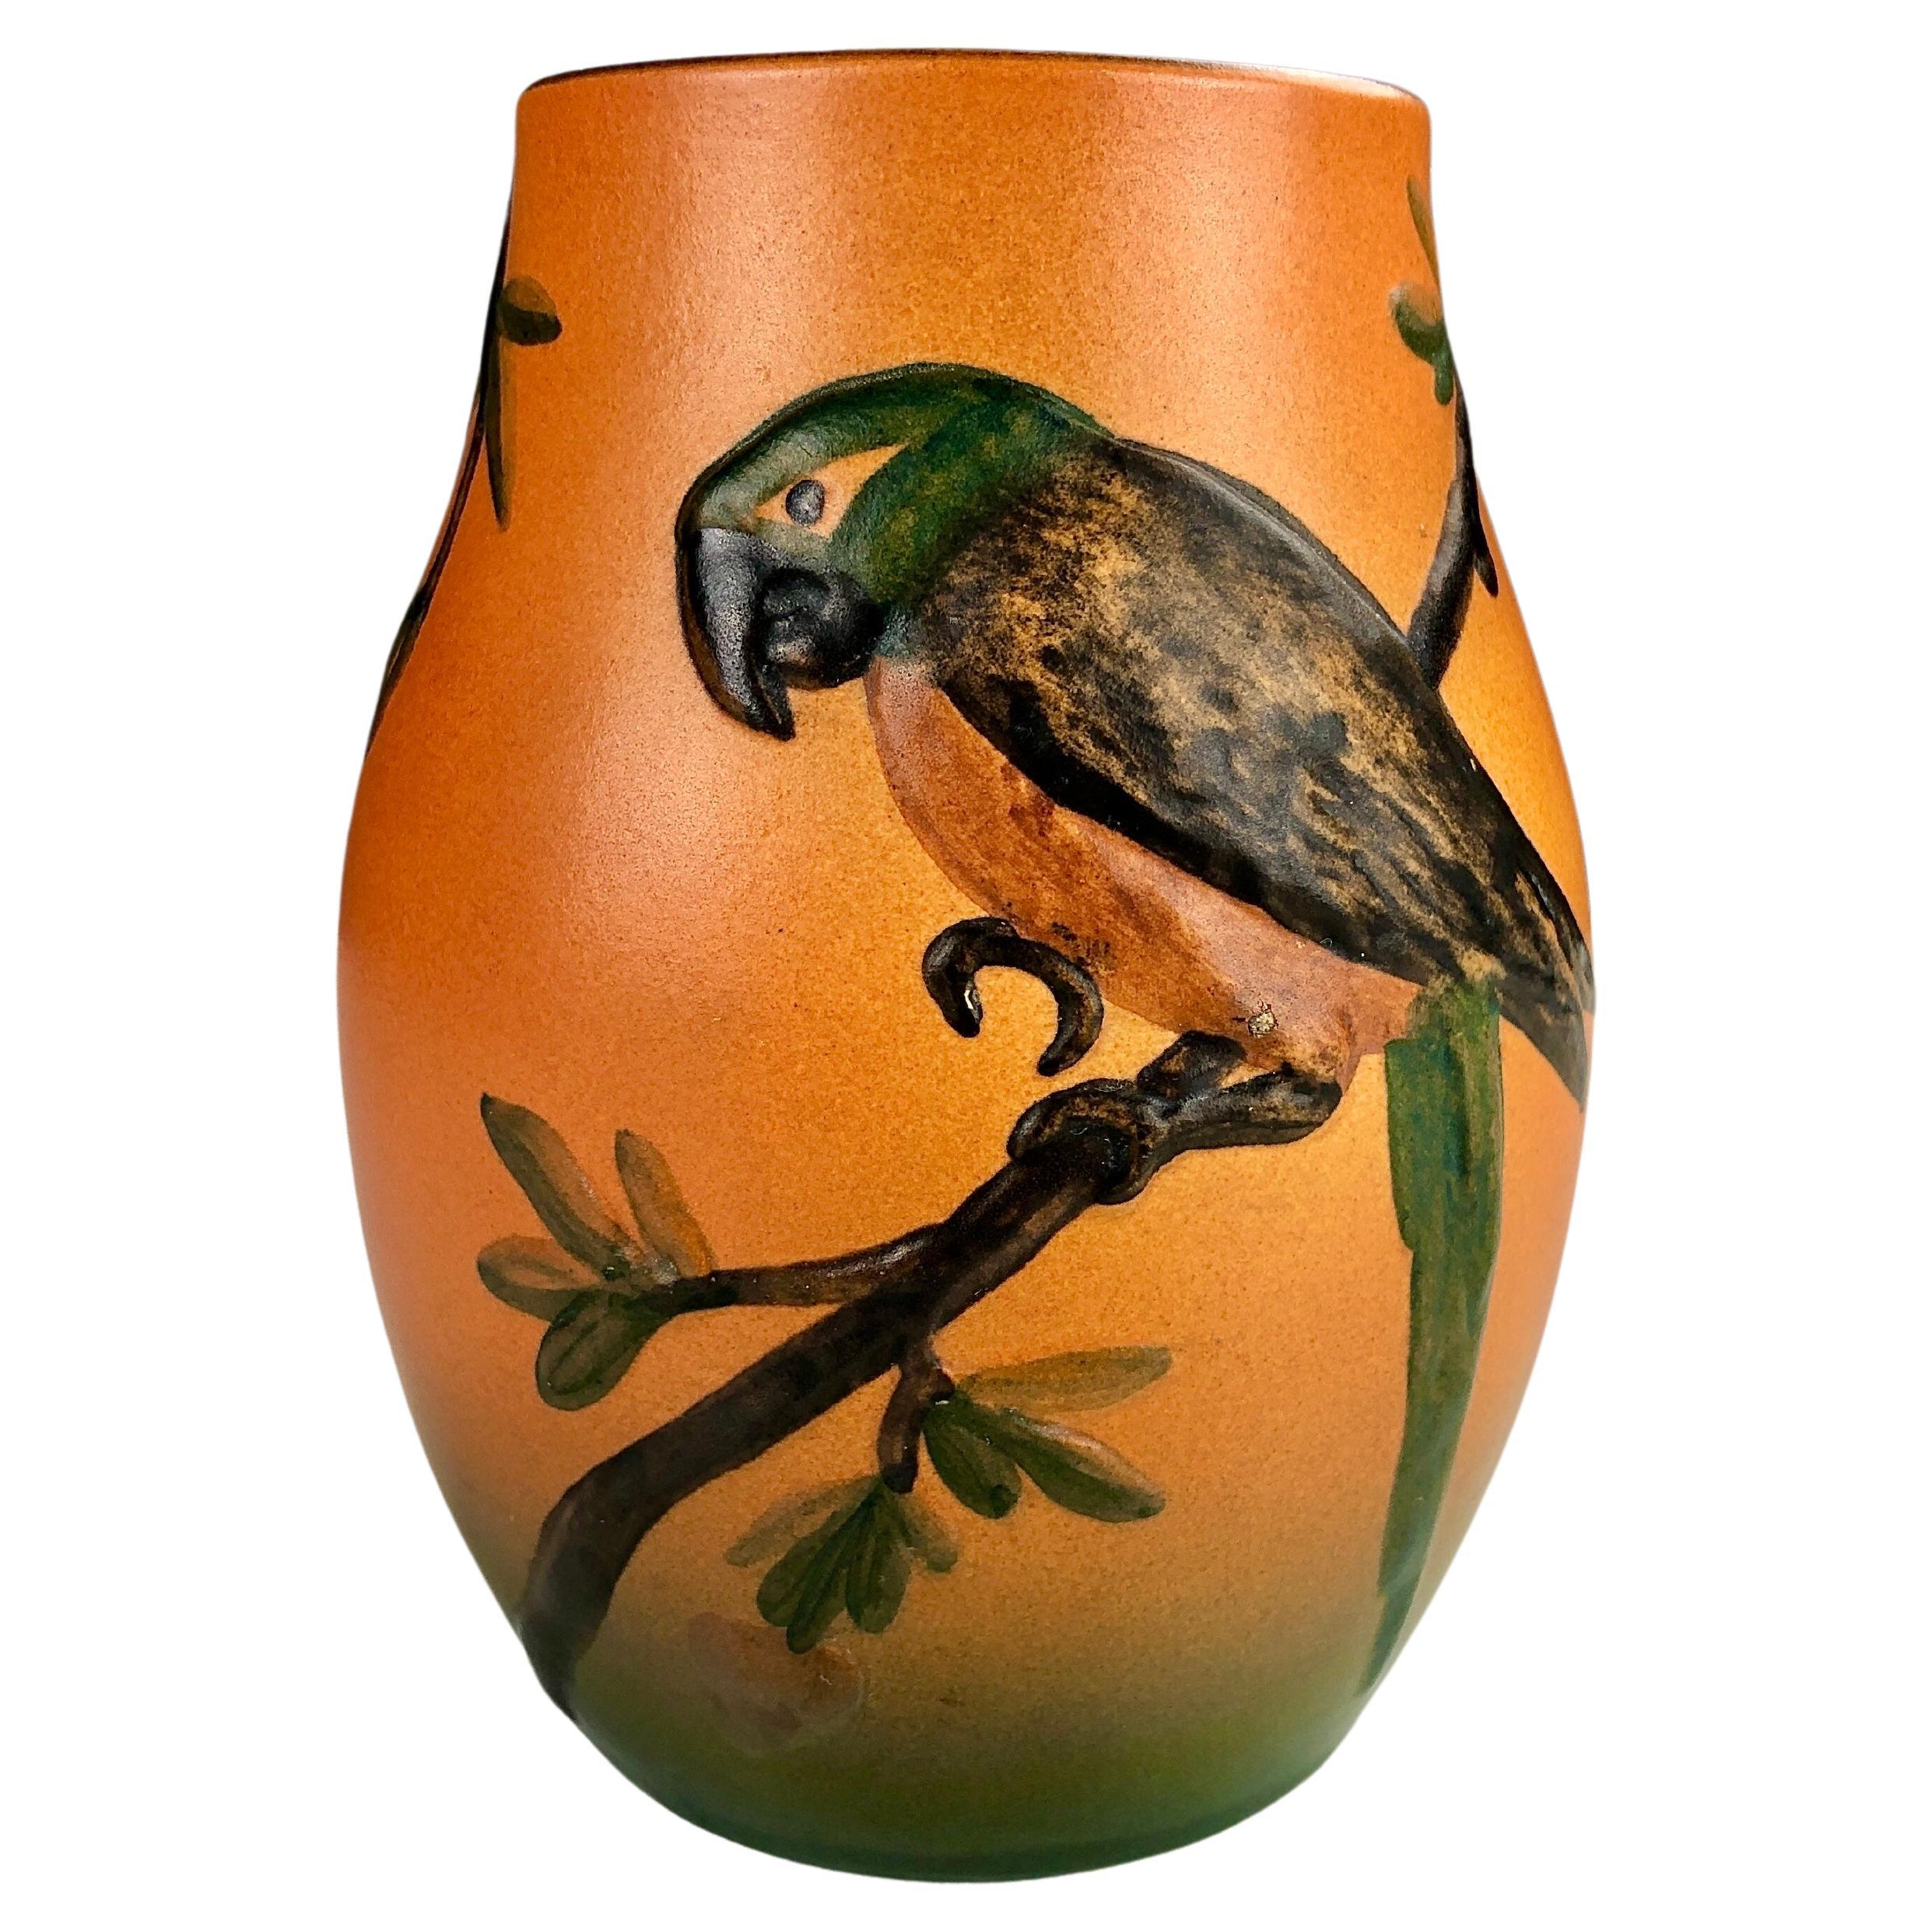 1920's Hand-Crafted Danish Art Nouveau Parrot Decorated Vase by P. Ipsens Enke